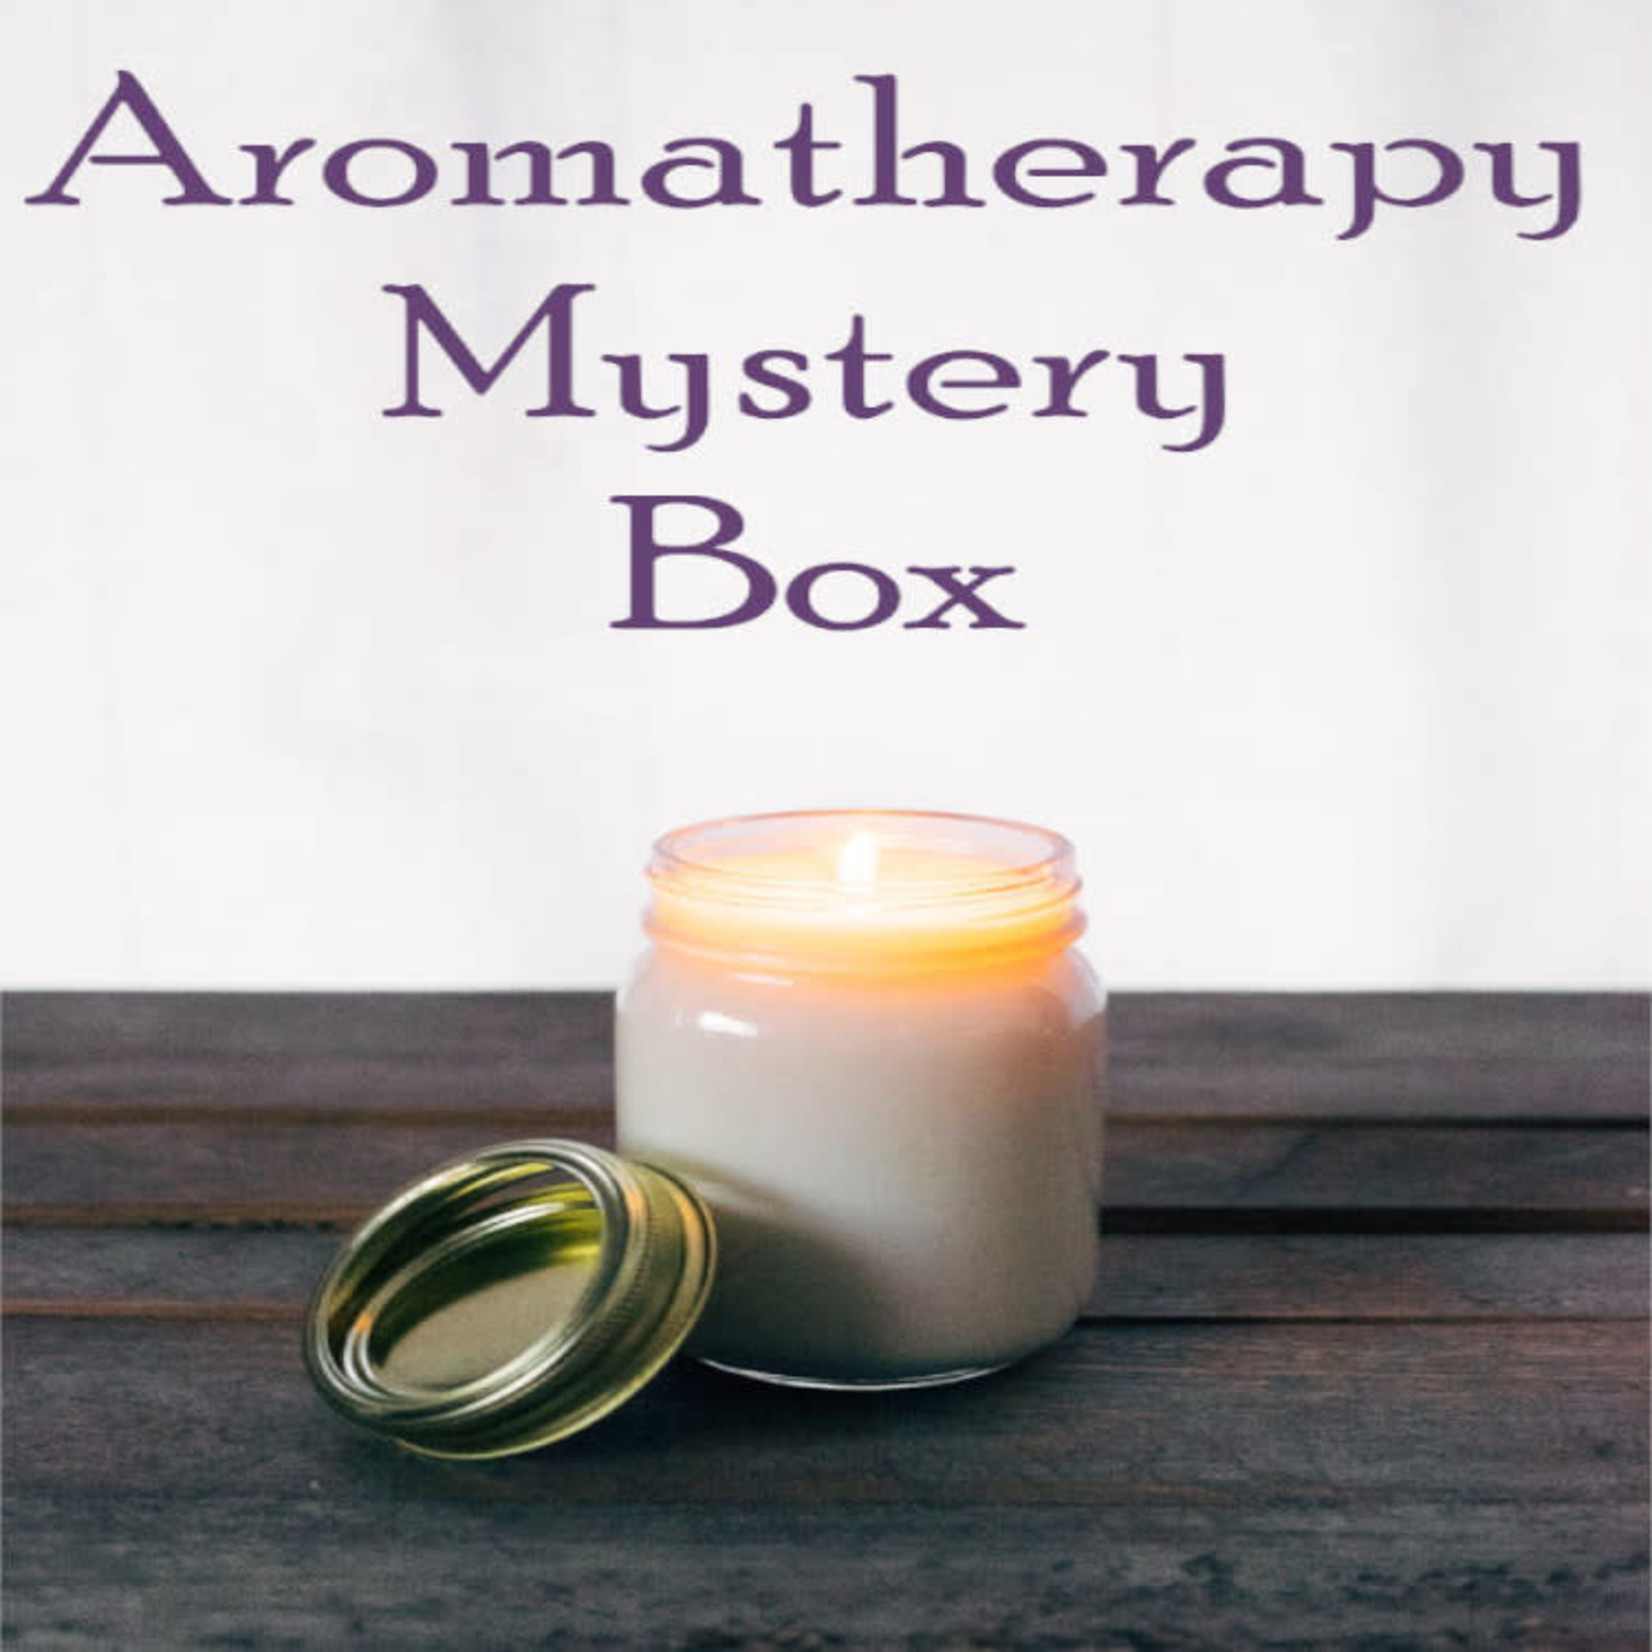 Pico's Worldwide Aromatherapy Mystery Box